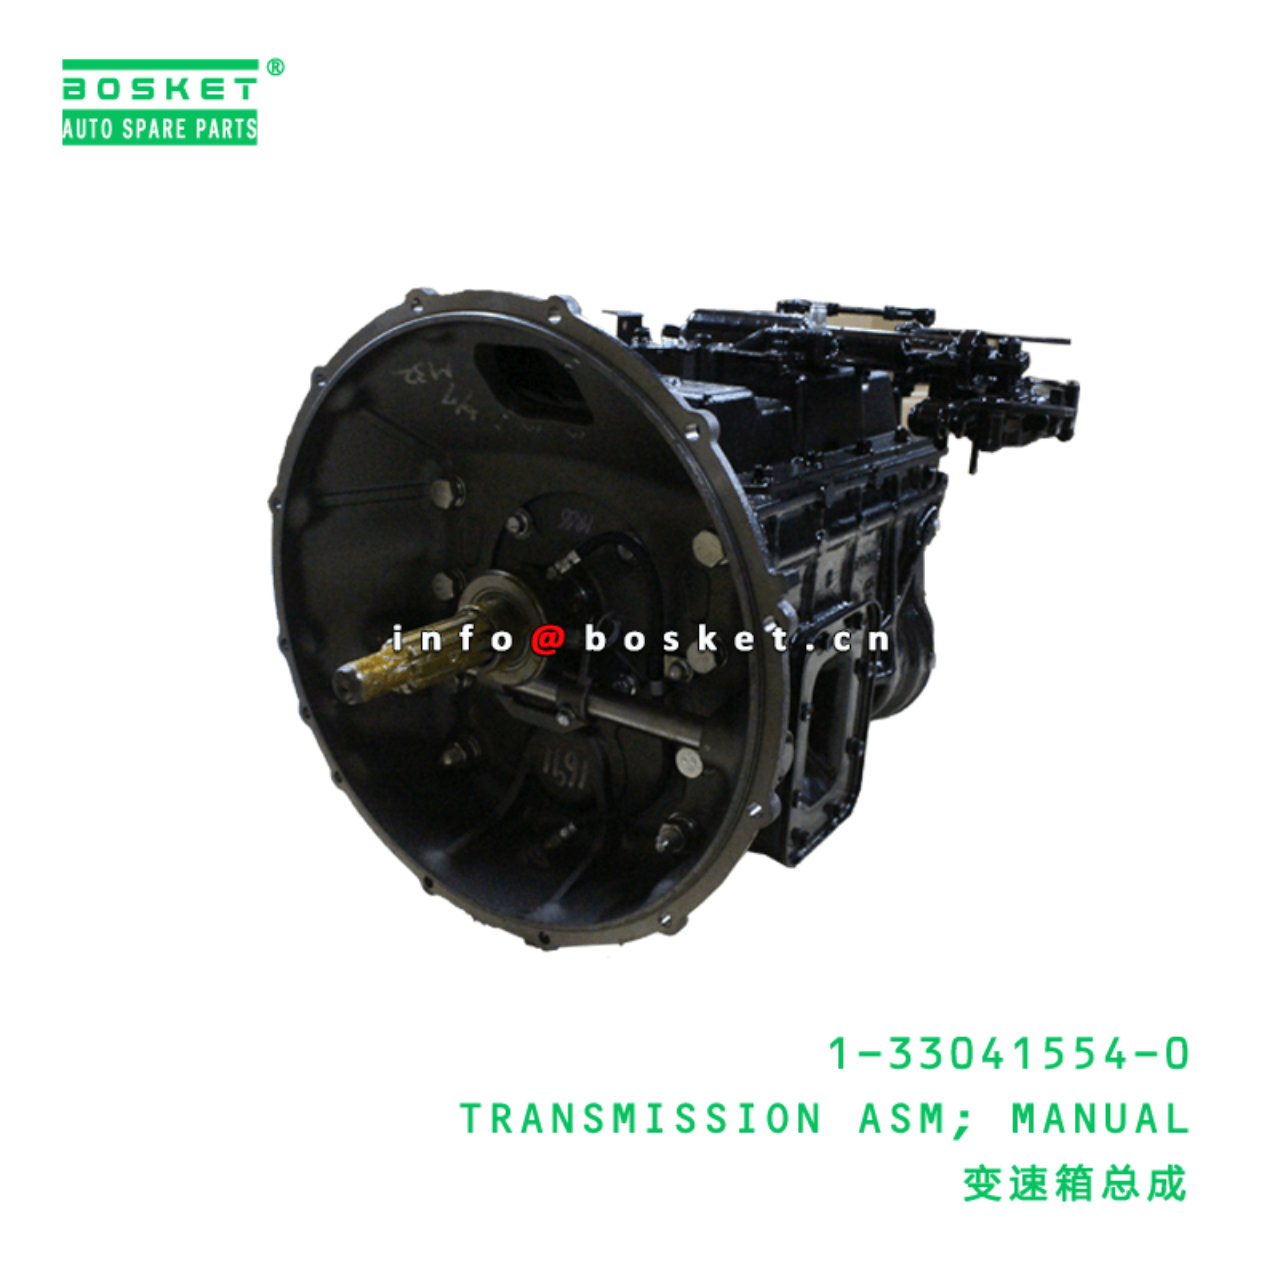 1-33041554-0 Manual Transmission Assembly Suitable for ISUZU FTR FVR 1330415540